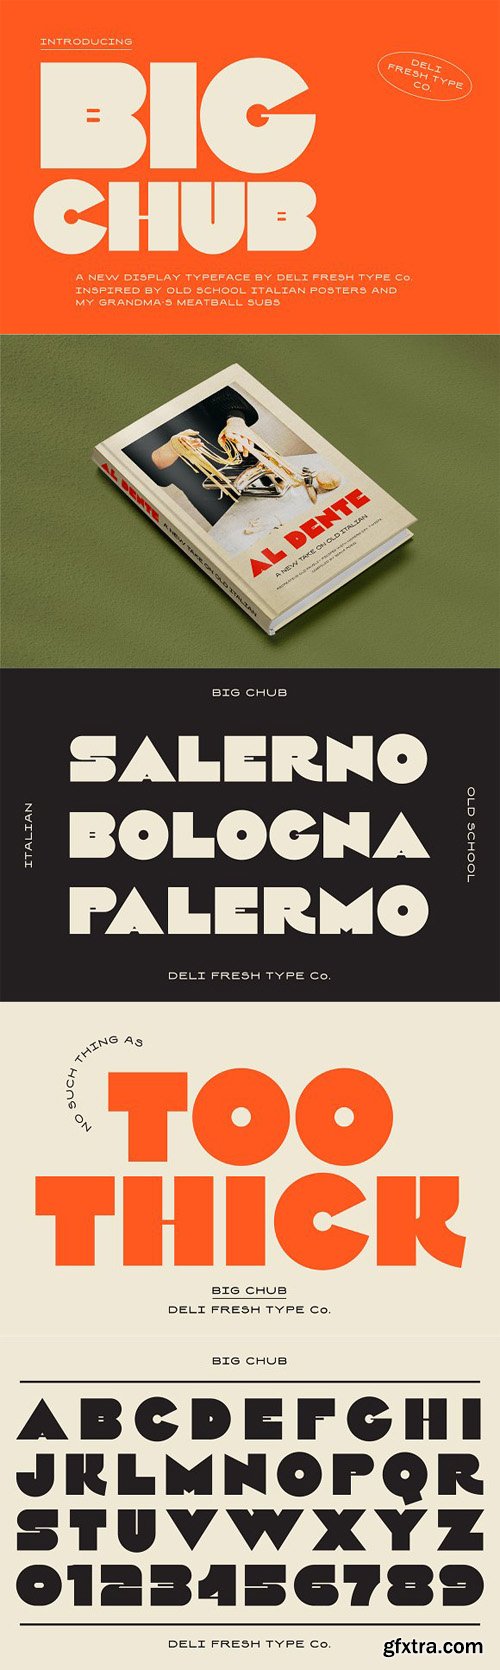 Big Chub - An Old School Italian Font